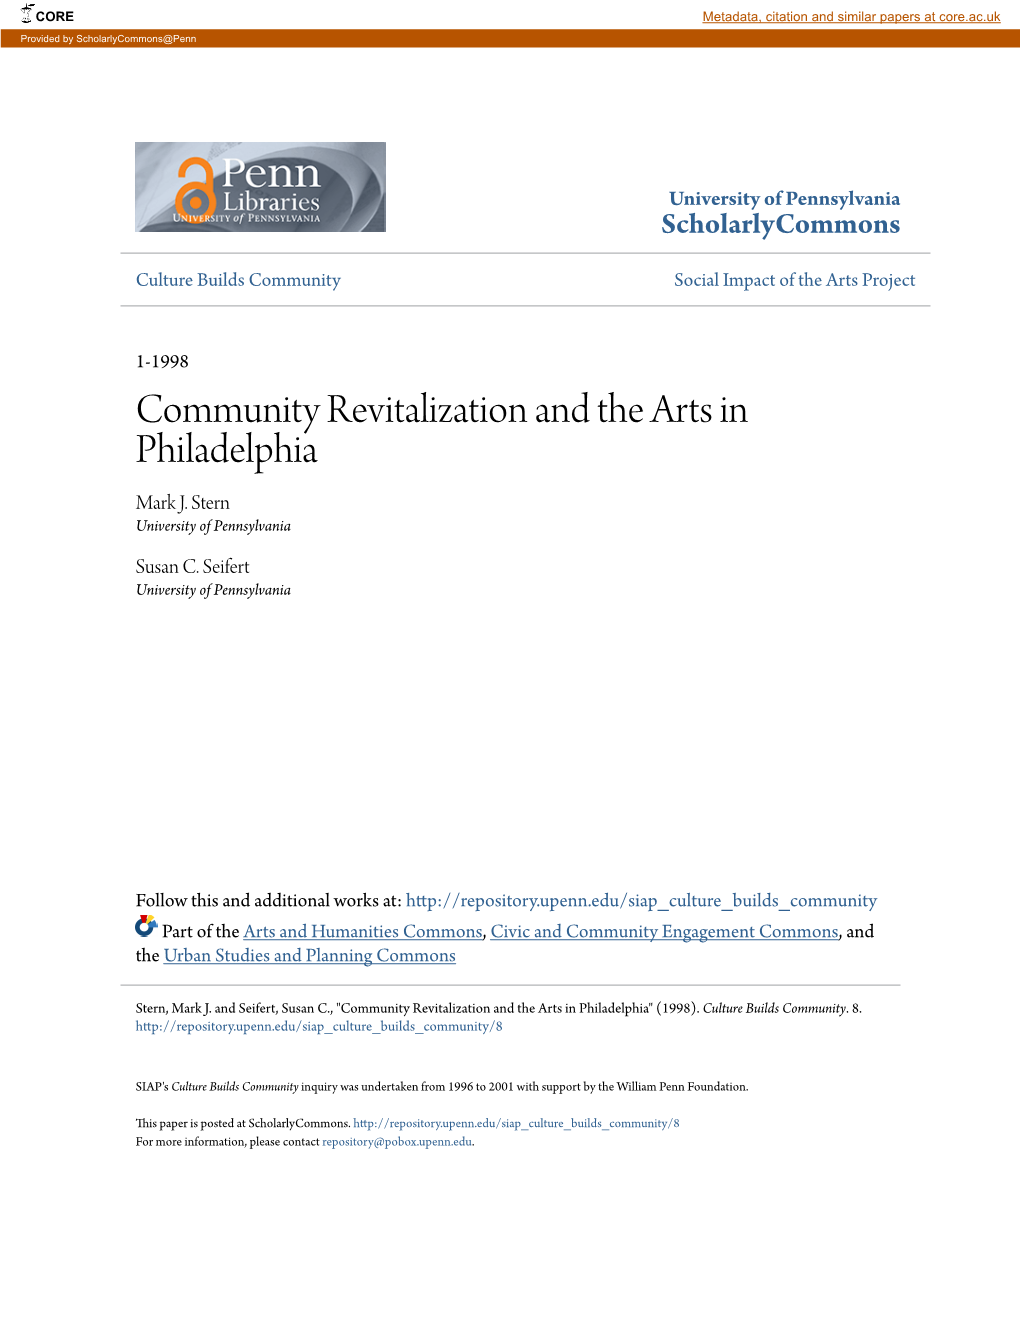 Community Revitalization and the Arts in Philadelphia Mark J